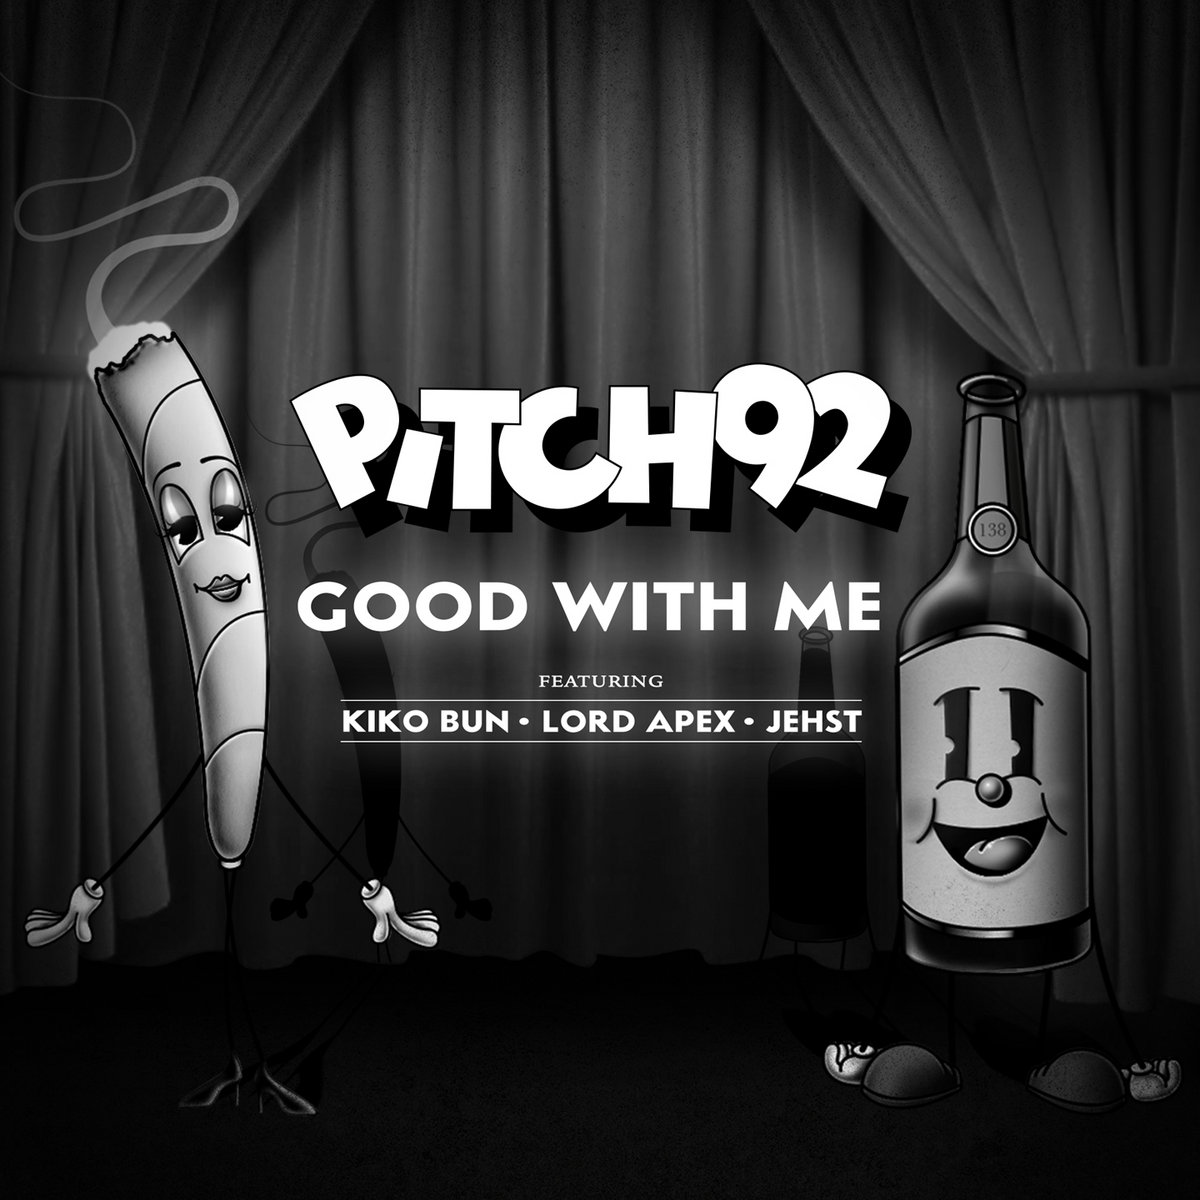 Good_with_me_feat._kiko_bun__lord_apex___jehst__pitch_92